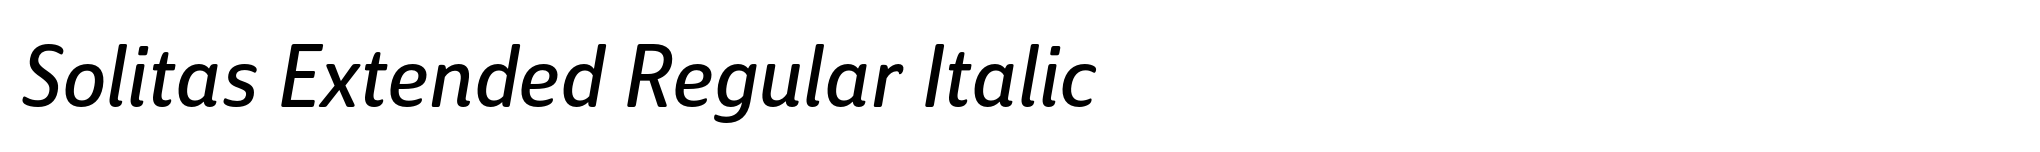 Solitas Extended Regular Italic image